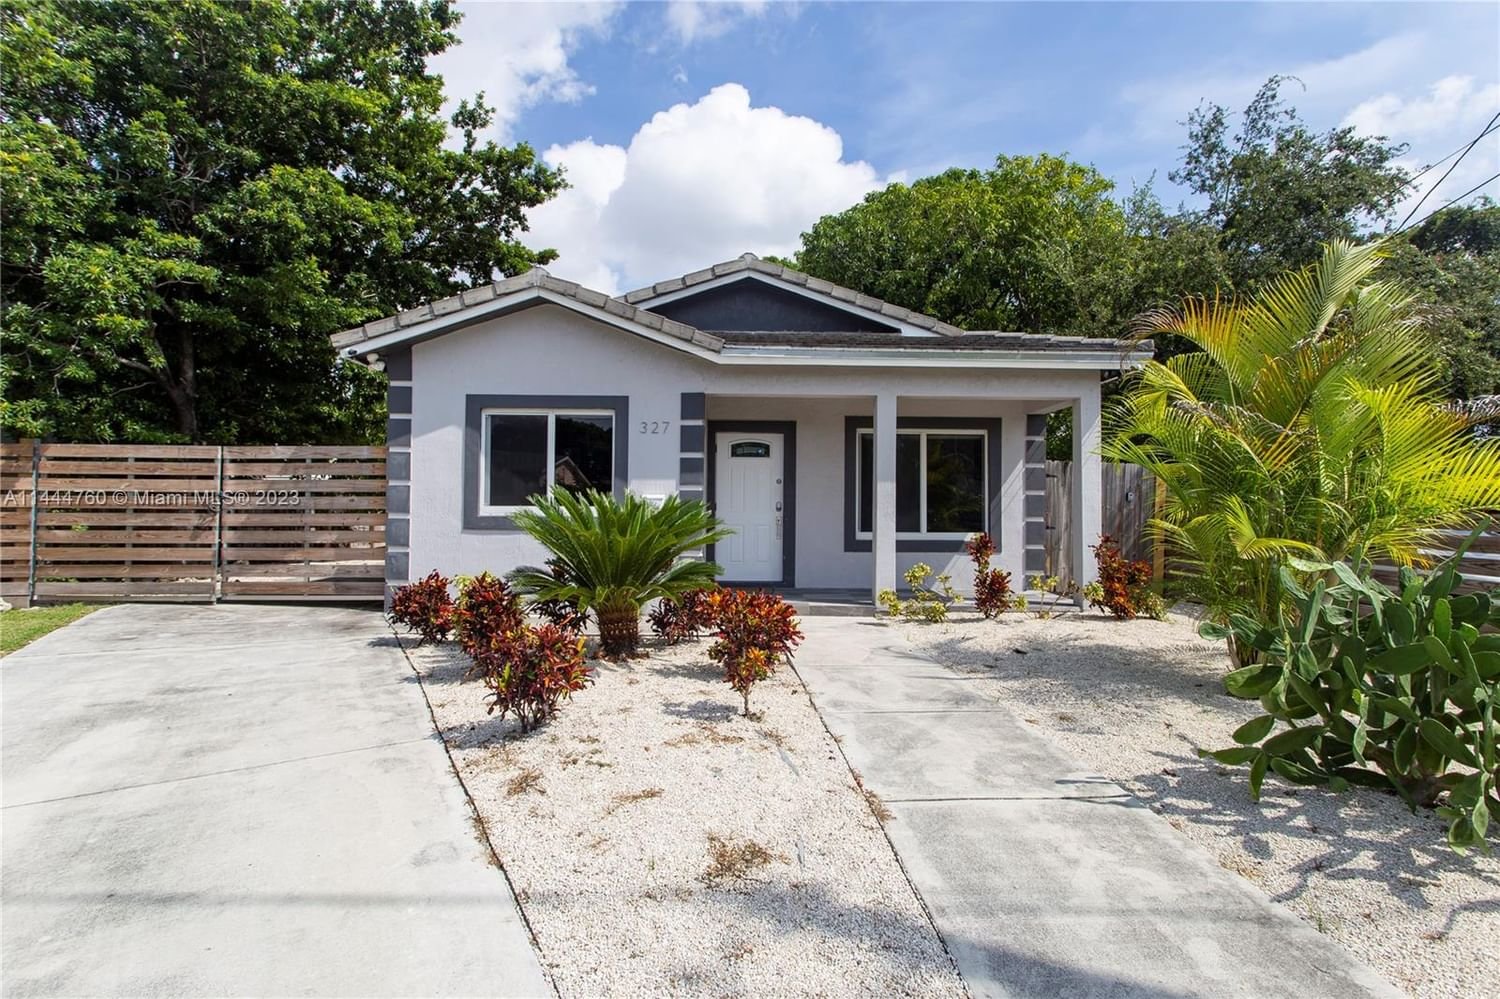 Real estate property located at 327 47th St, Miami-Dade County, Miami, FL